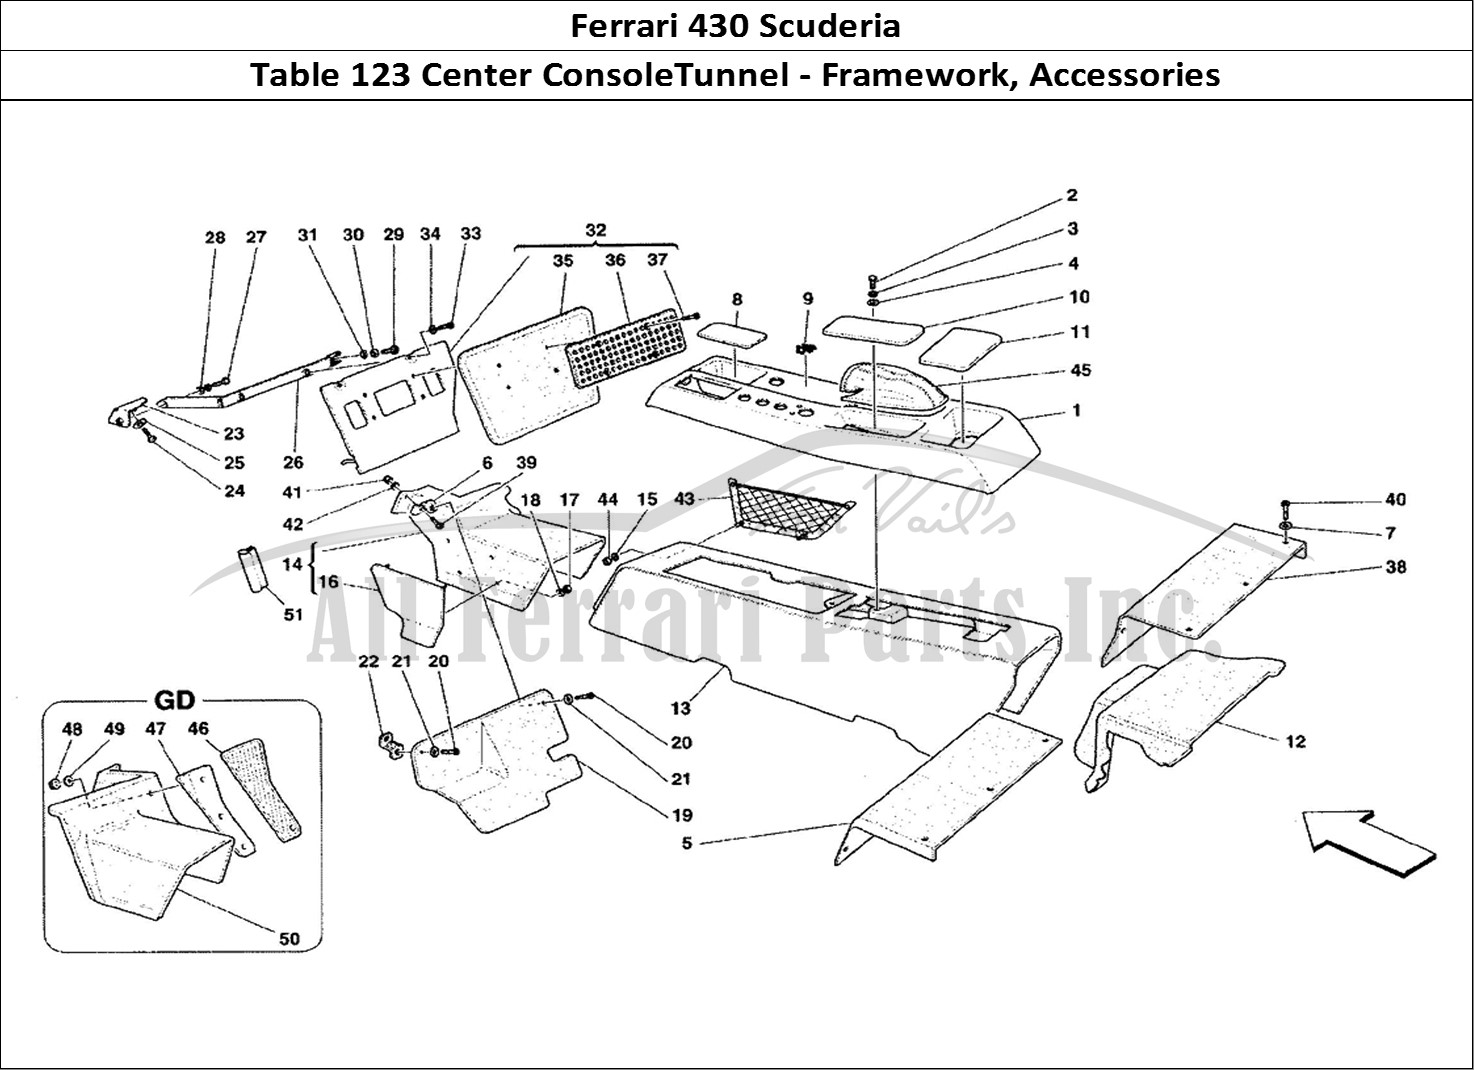 Ferrari Parts Ferrari 430 Scuderia Page 123 Tunnel - Framework and Ac